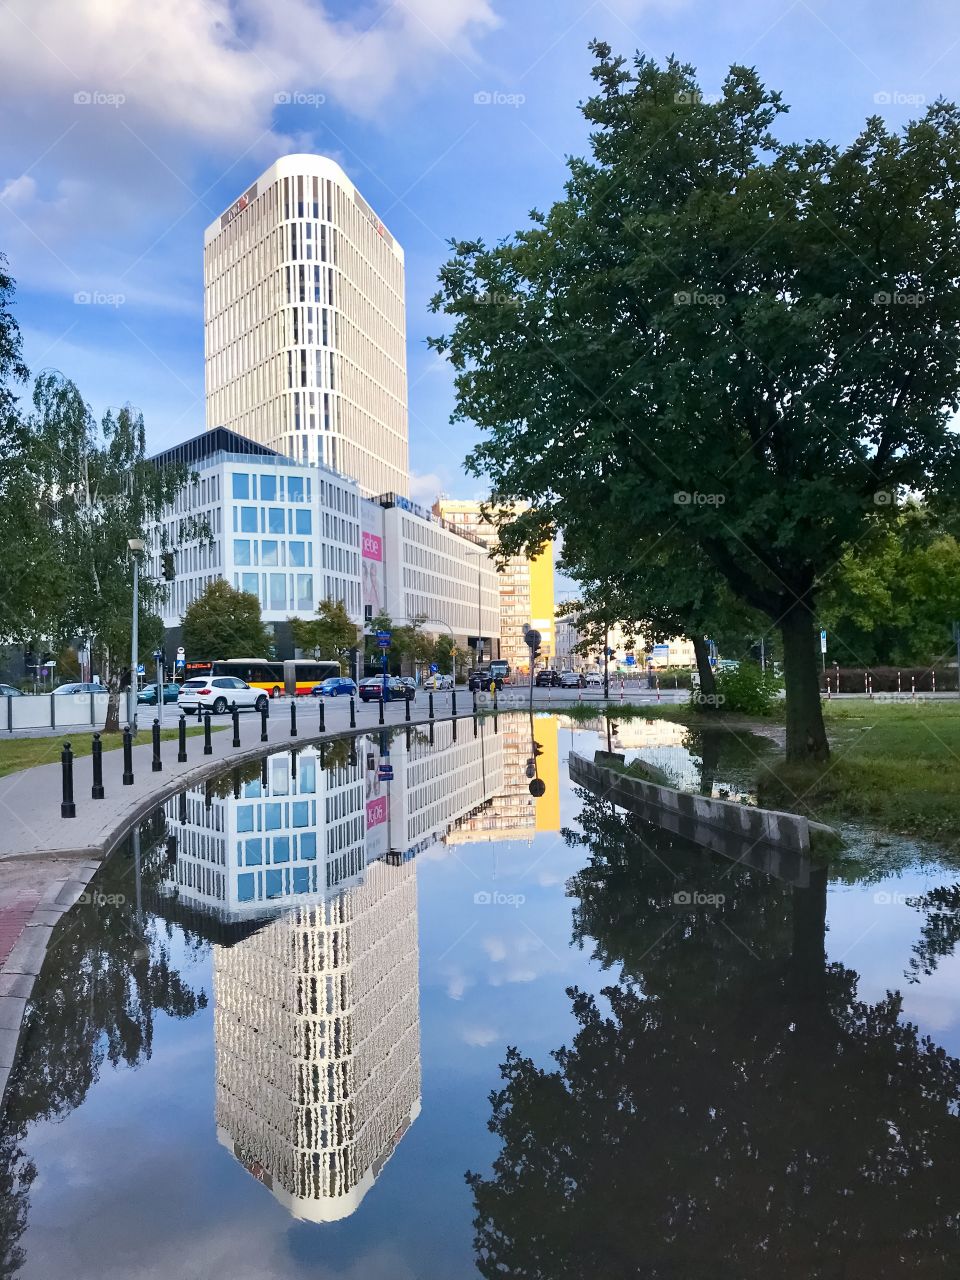 Warsaw after rain 